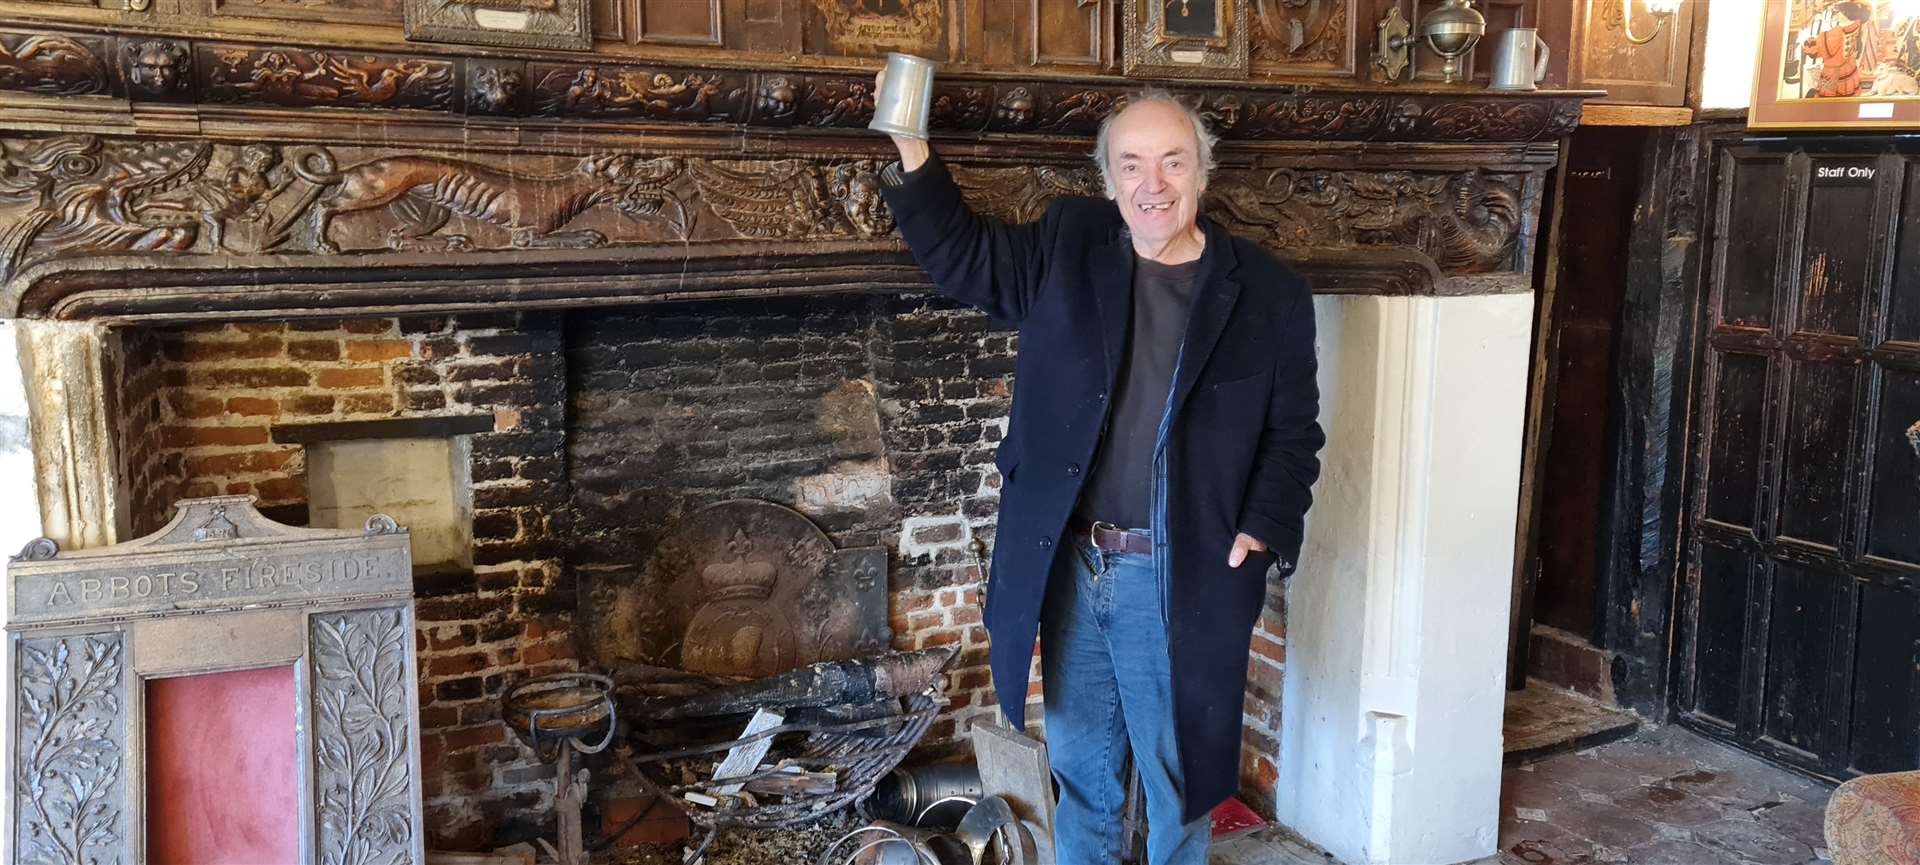 Peter Malkin has removed the wood burner to bring back the original inglenook fireplace